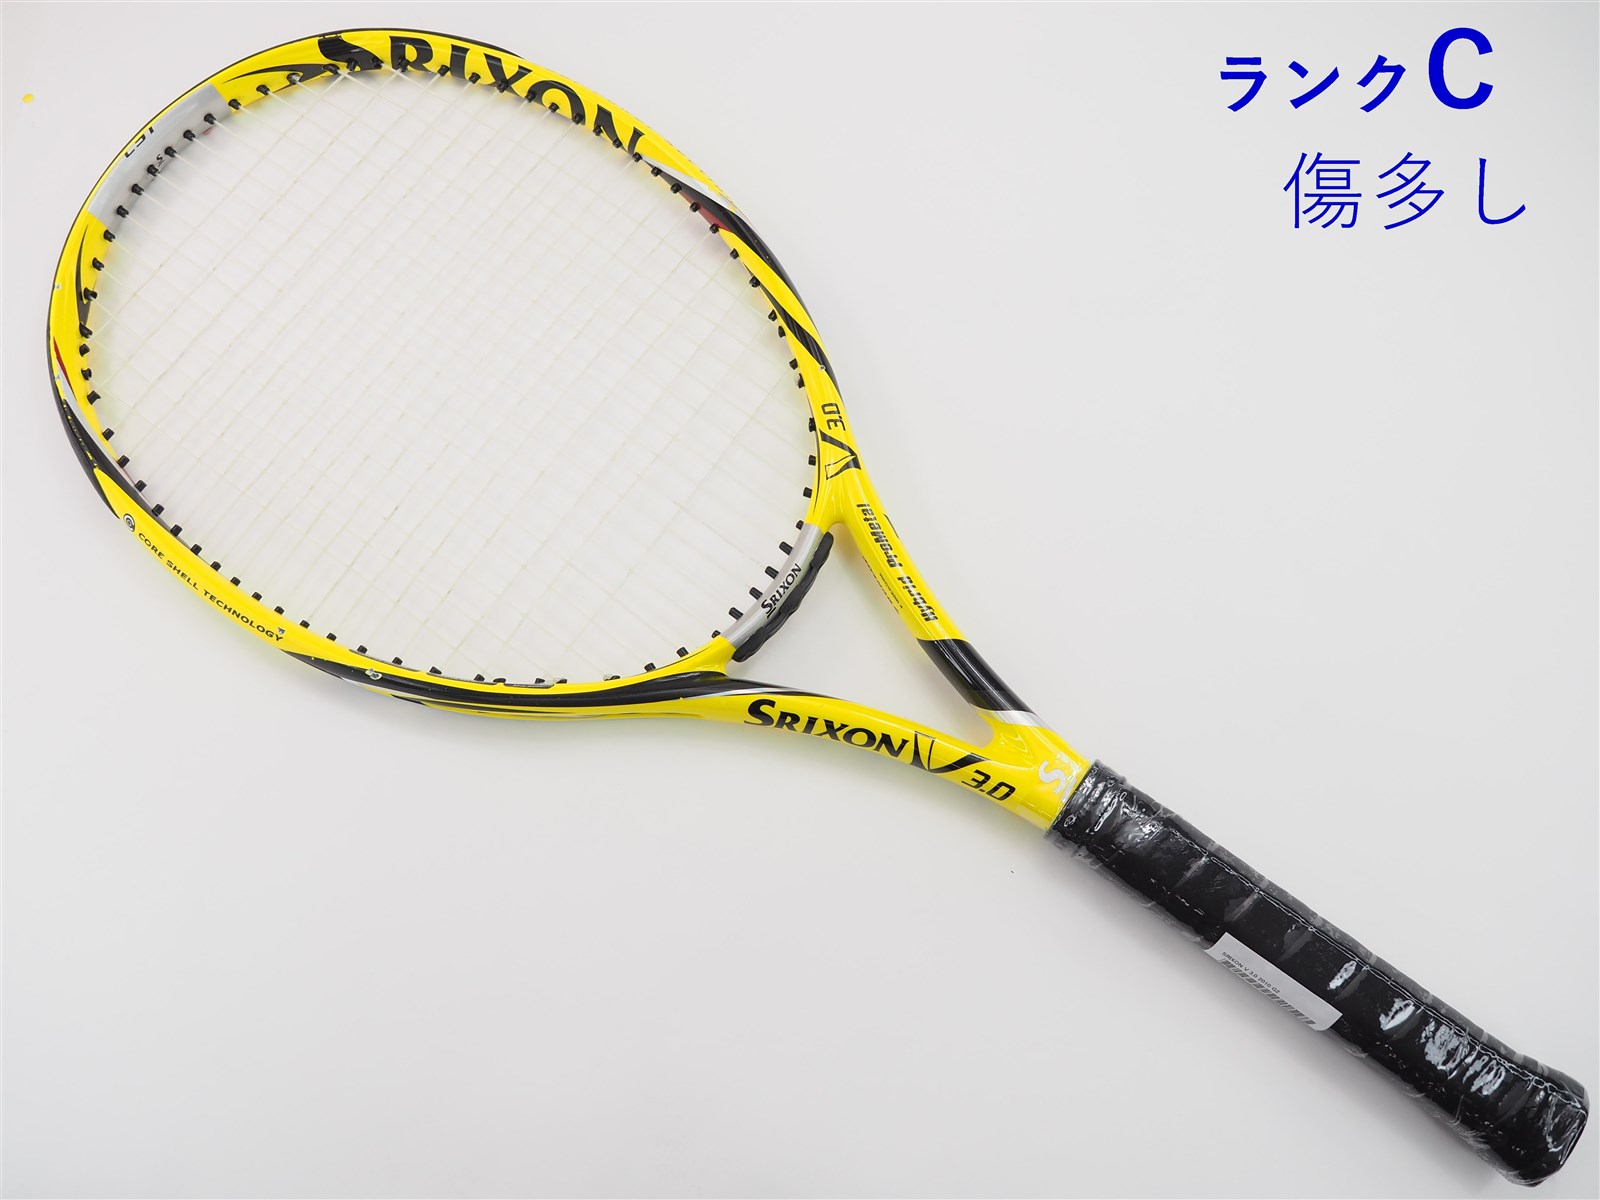 Hybrid pro metal V 3.0 テニスラケット 中古 スリクソン - ラケット